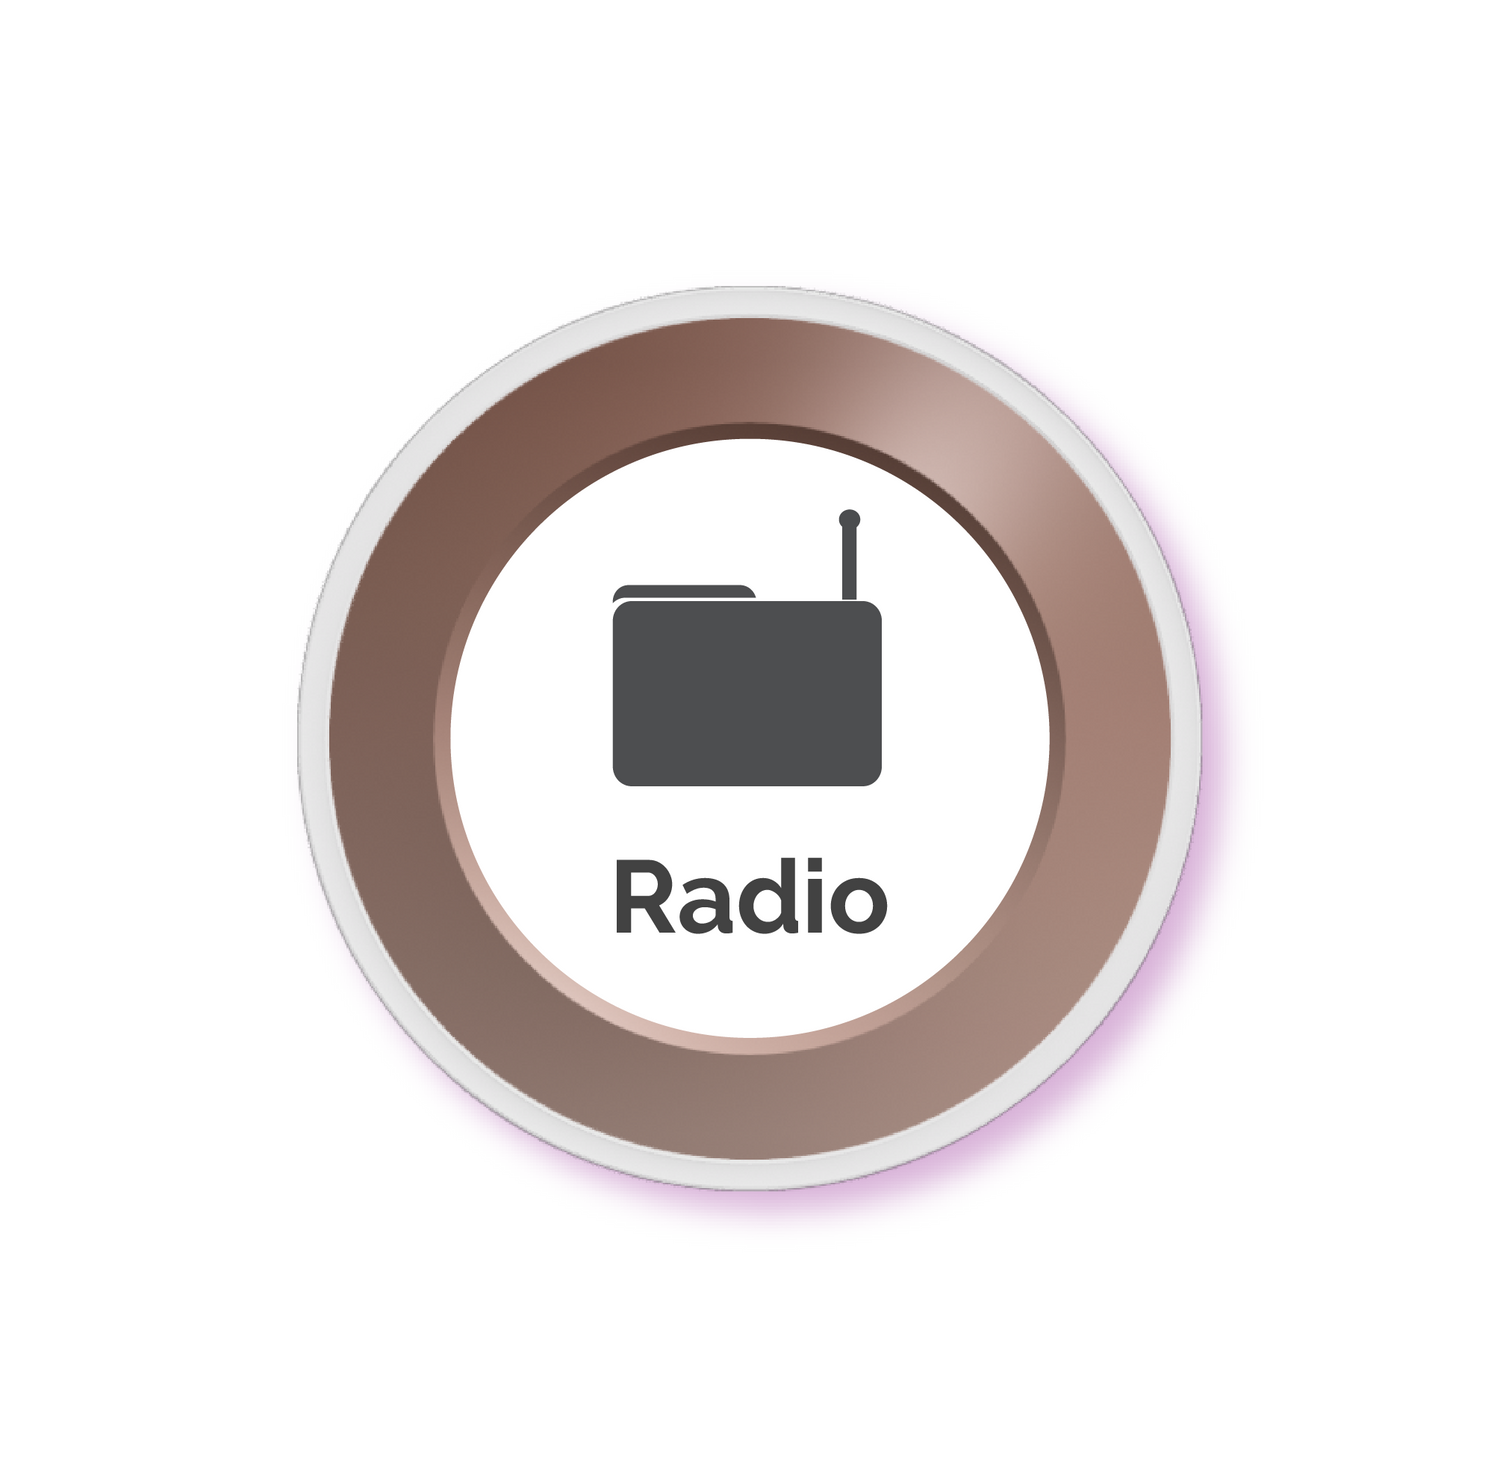 Radio button